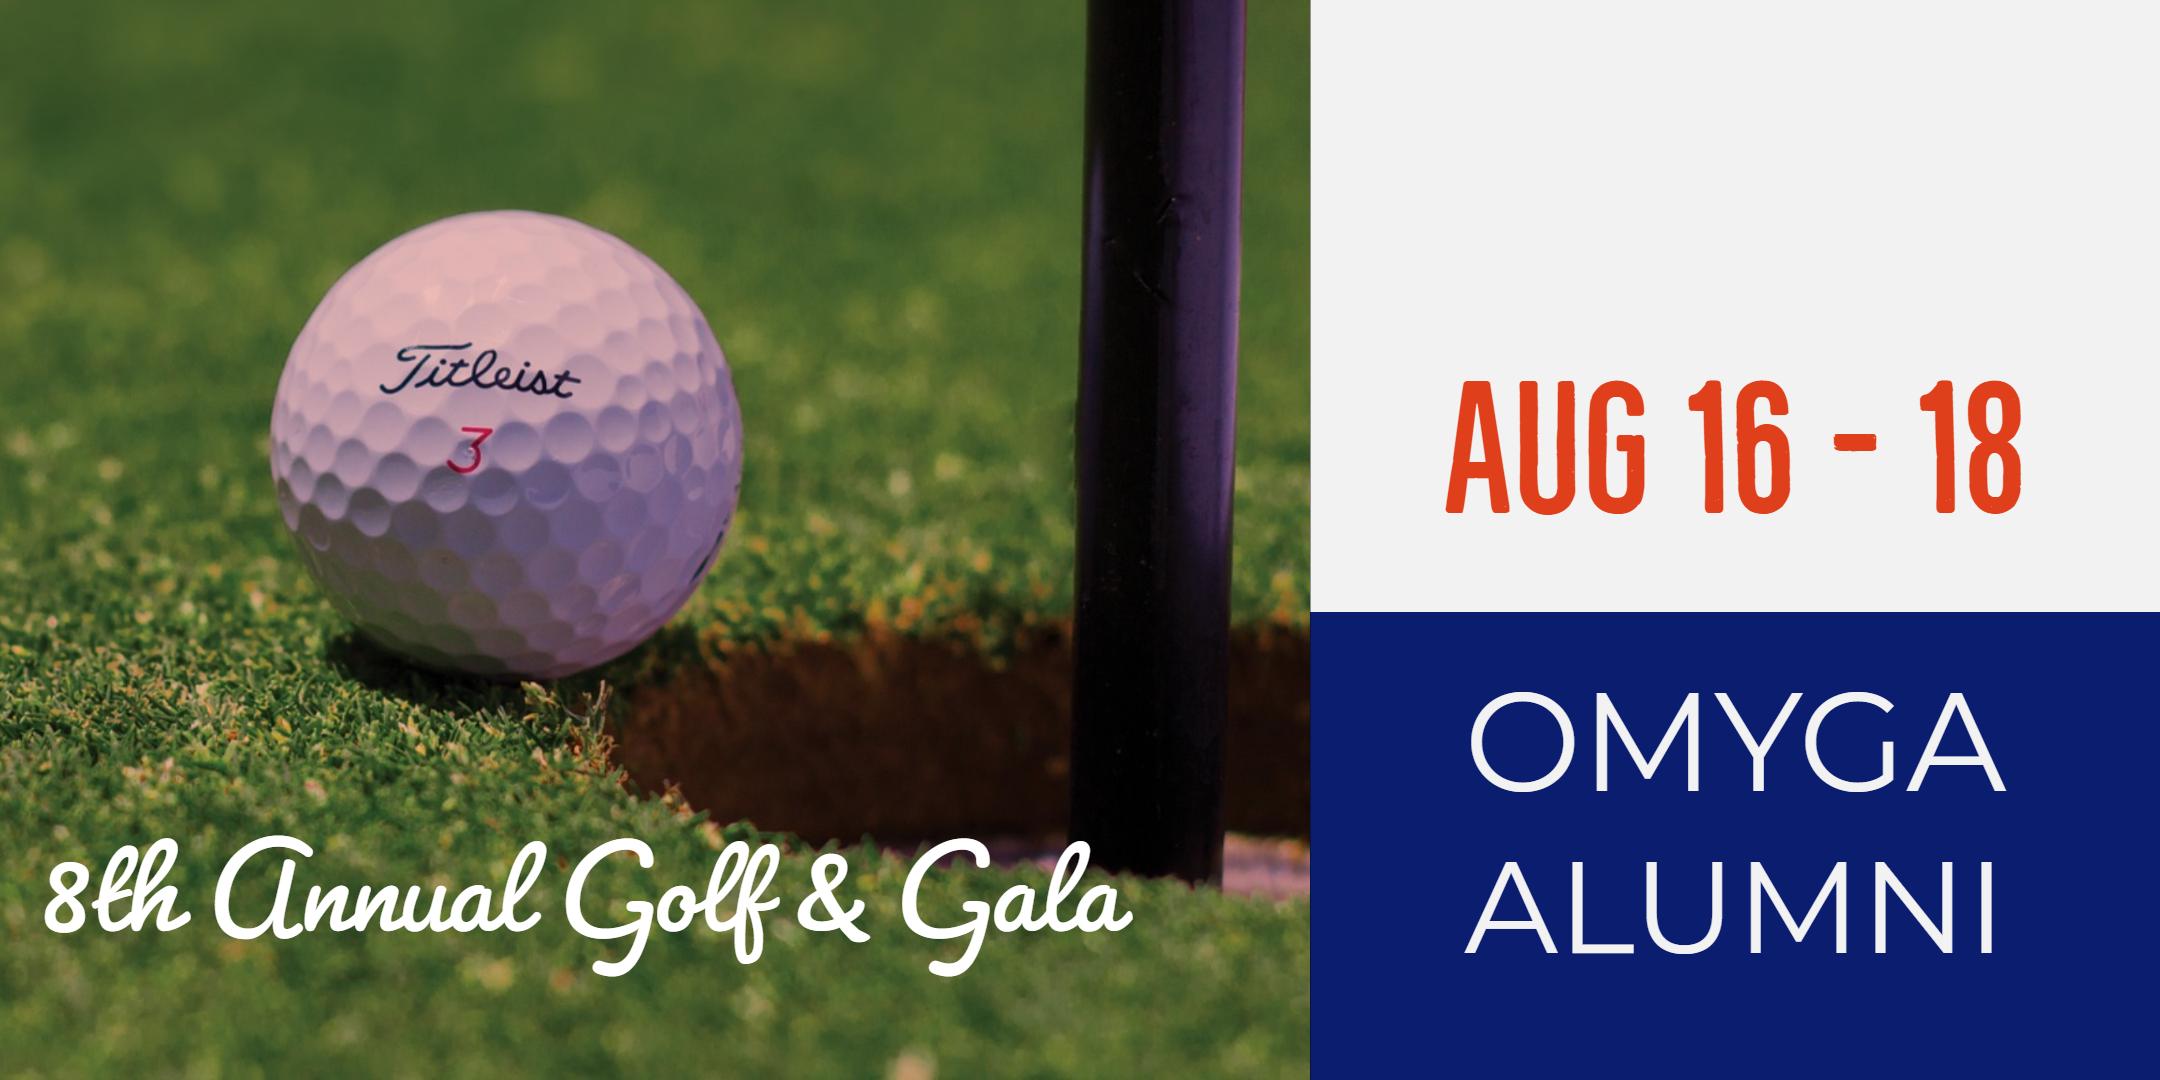 The 9th Annual OMYGA Alumni Golf & Gala Event